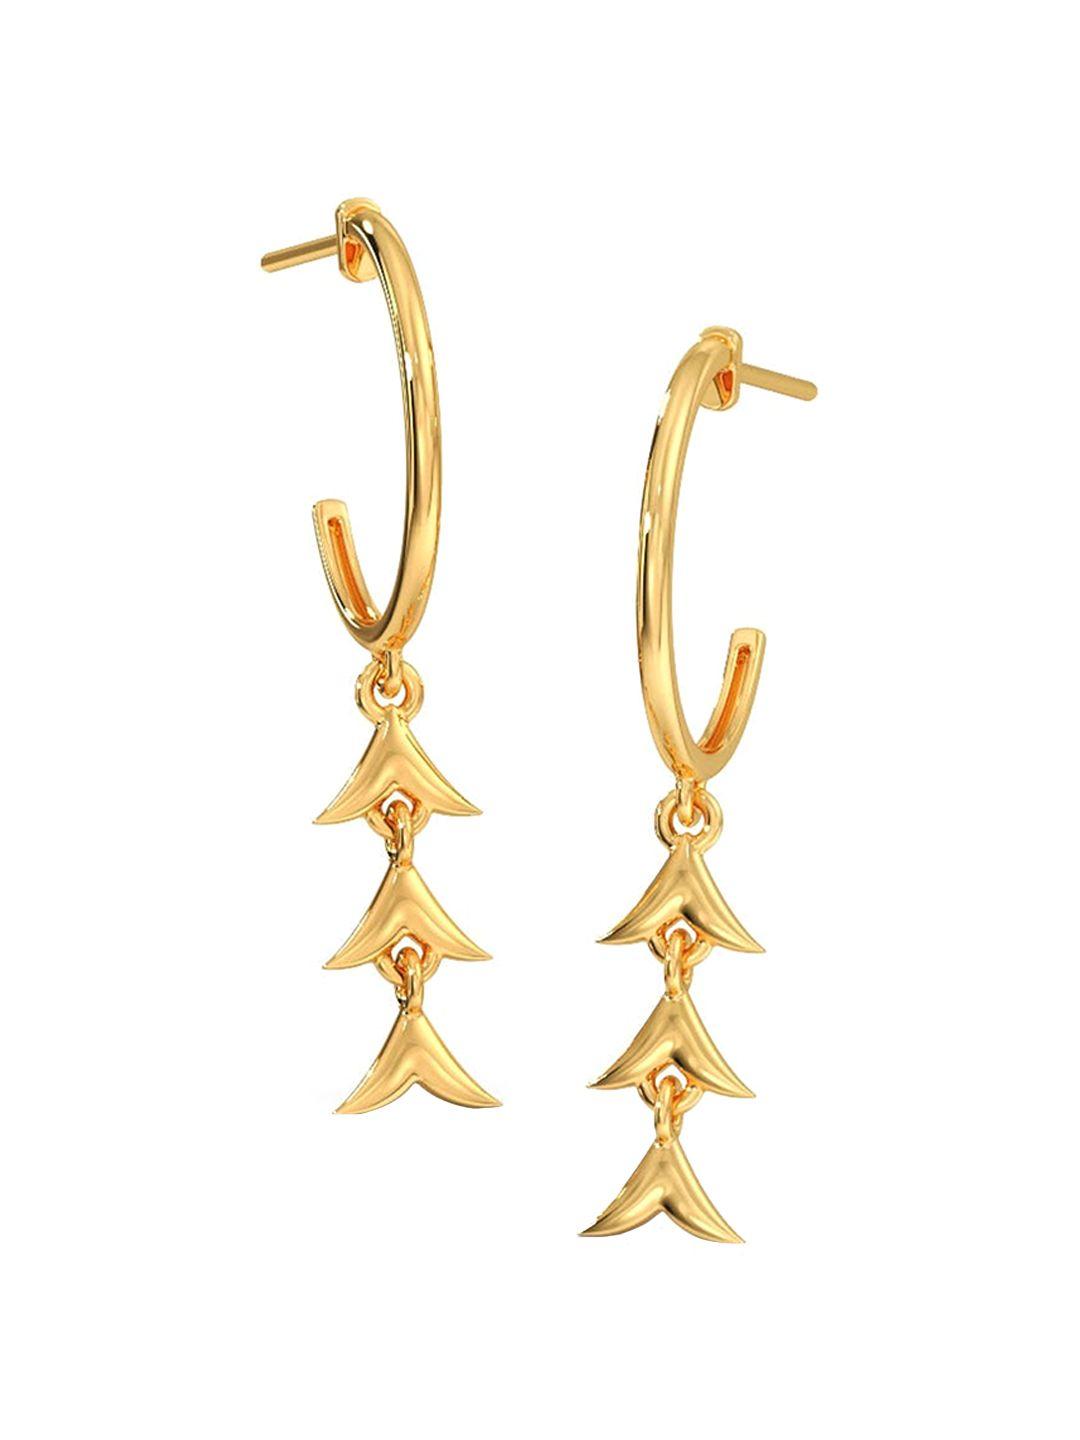 candere a kalyan jewellers company 18kt gold drop earrings-1.0gm